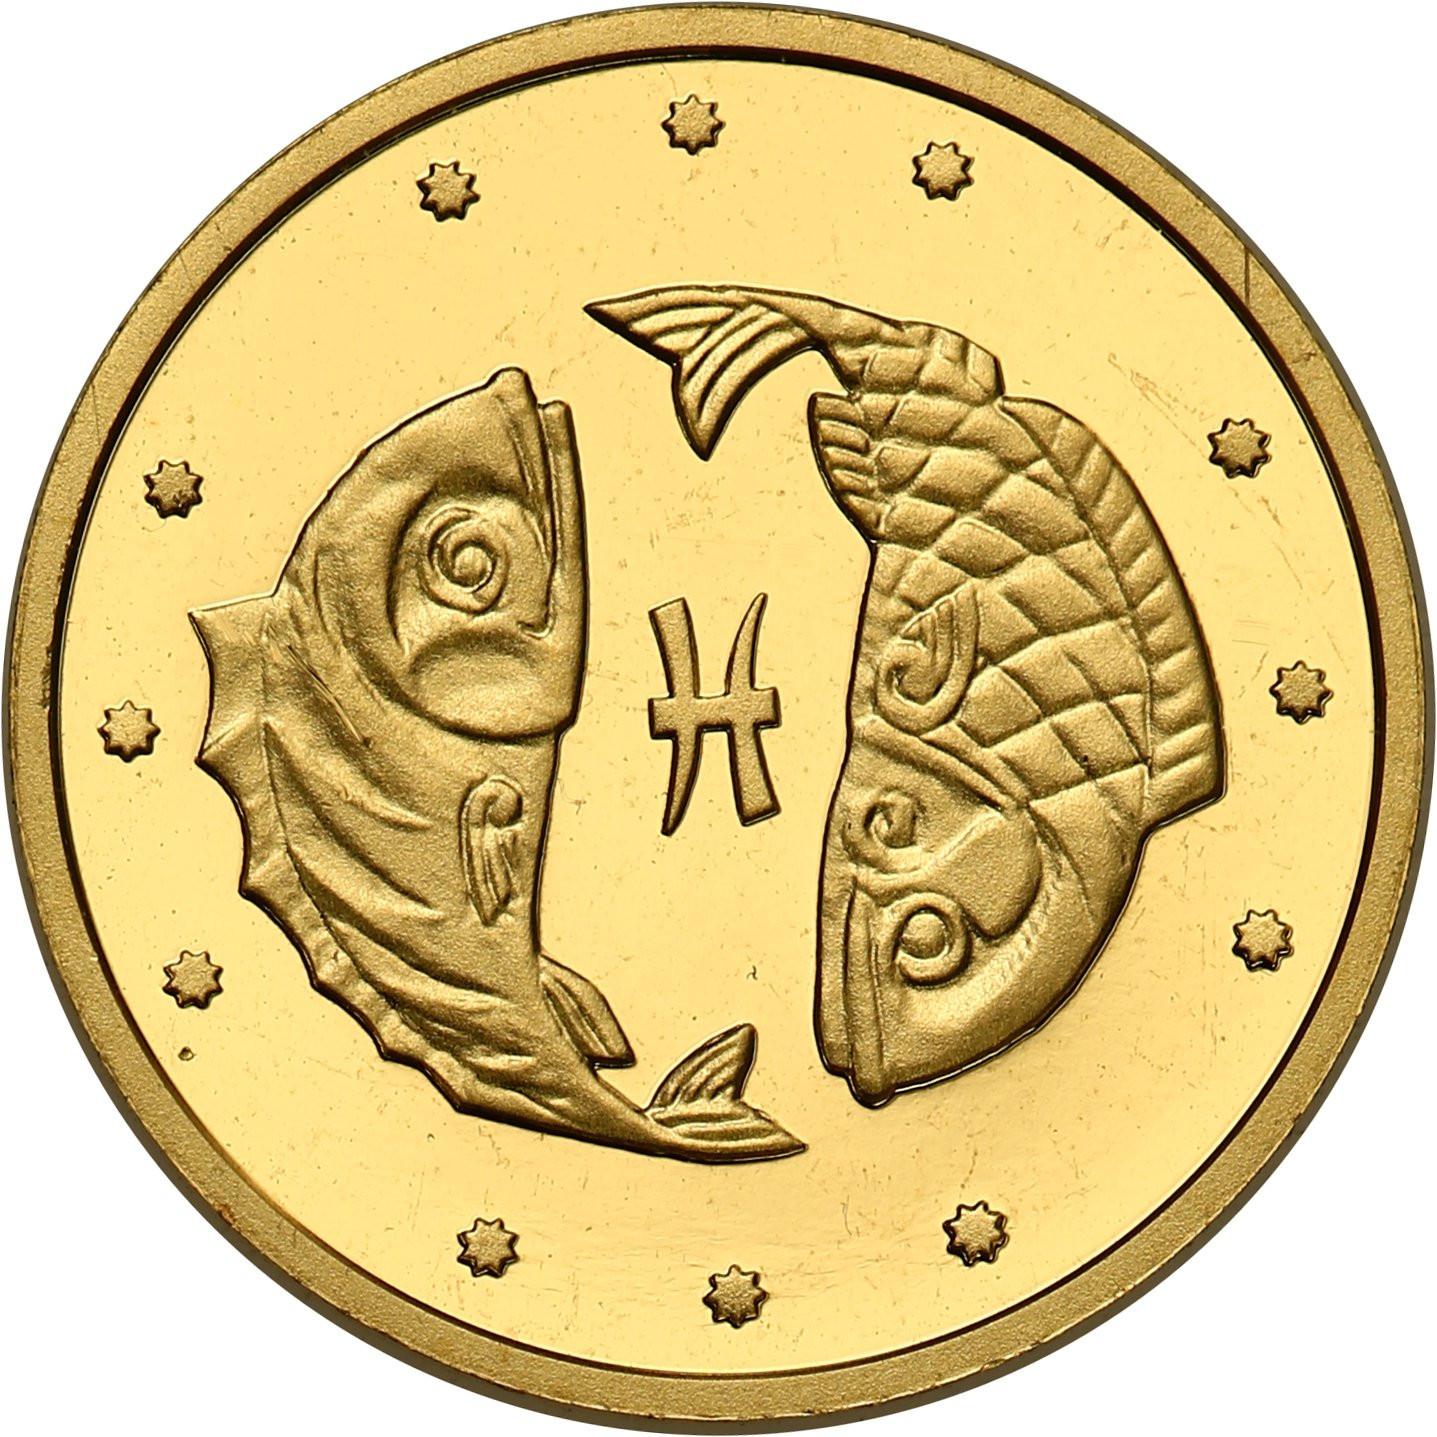 Ukraina. 2 ruble 2007 - znak zodiaku RYBY